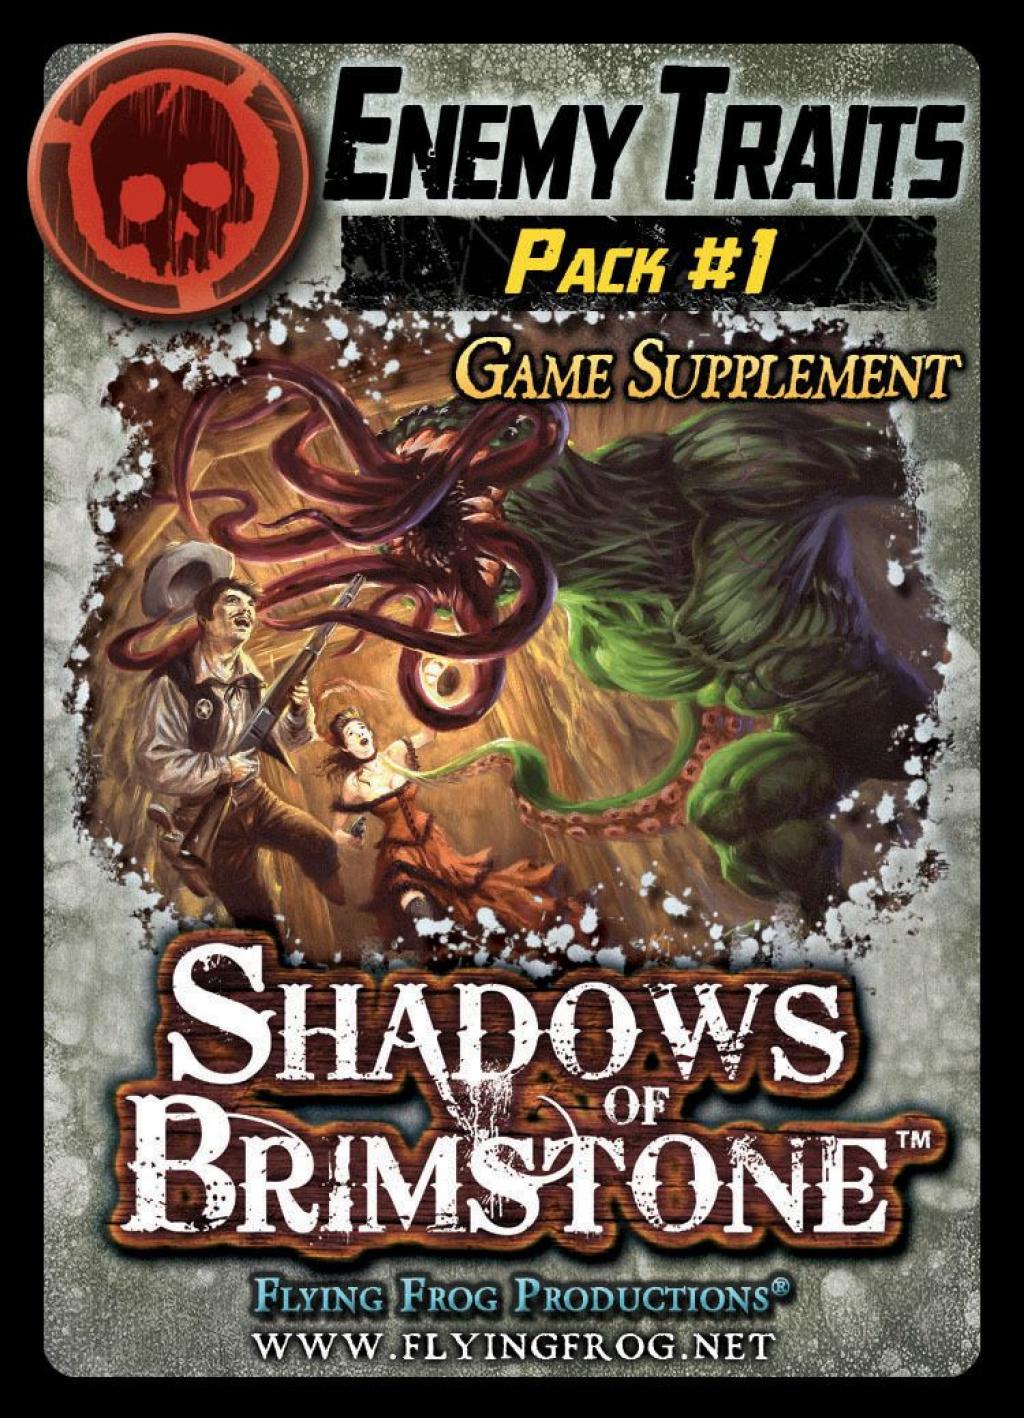 Shadows of Brimstone: Enemy Traits #1 Supplement